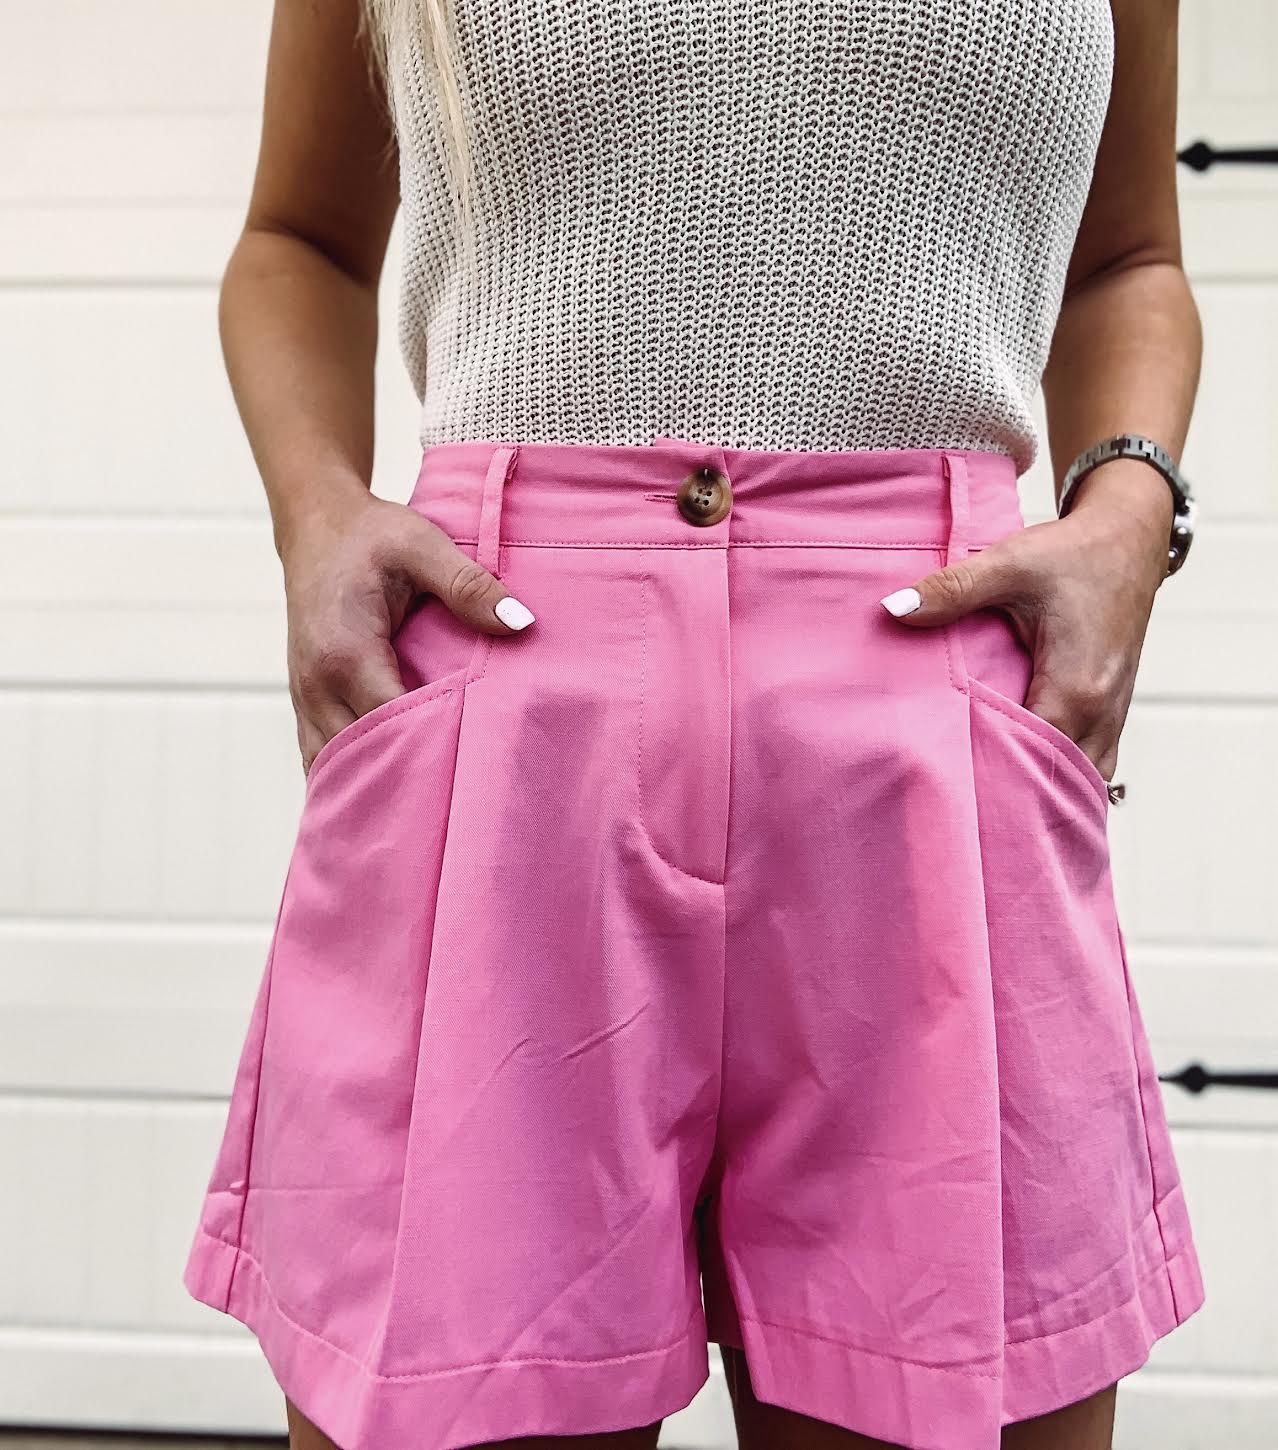 Bubblegum Pink Shorts